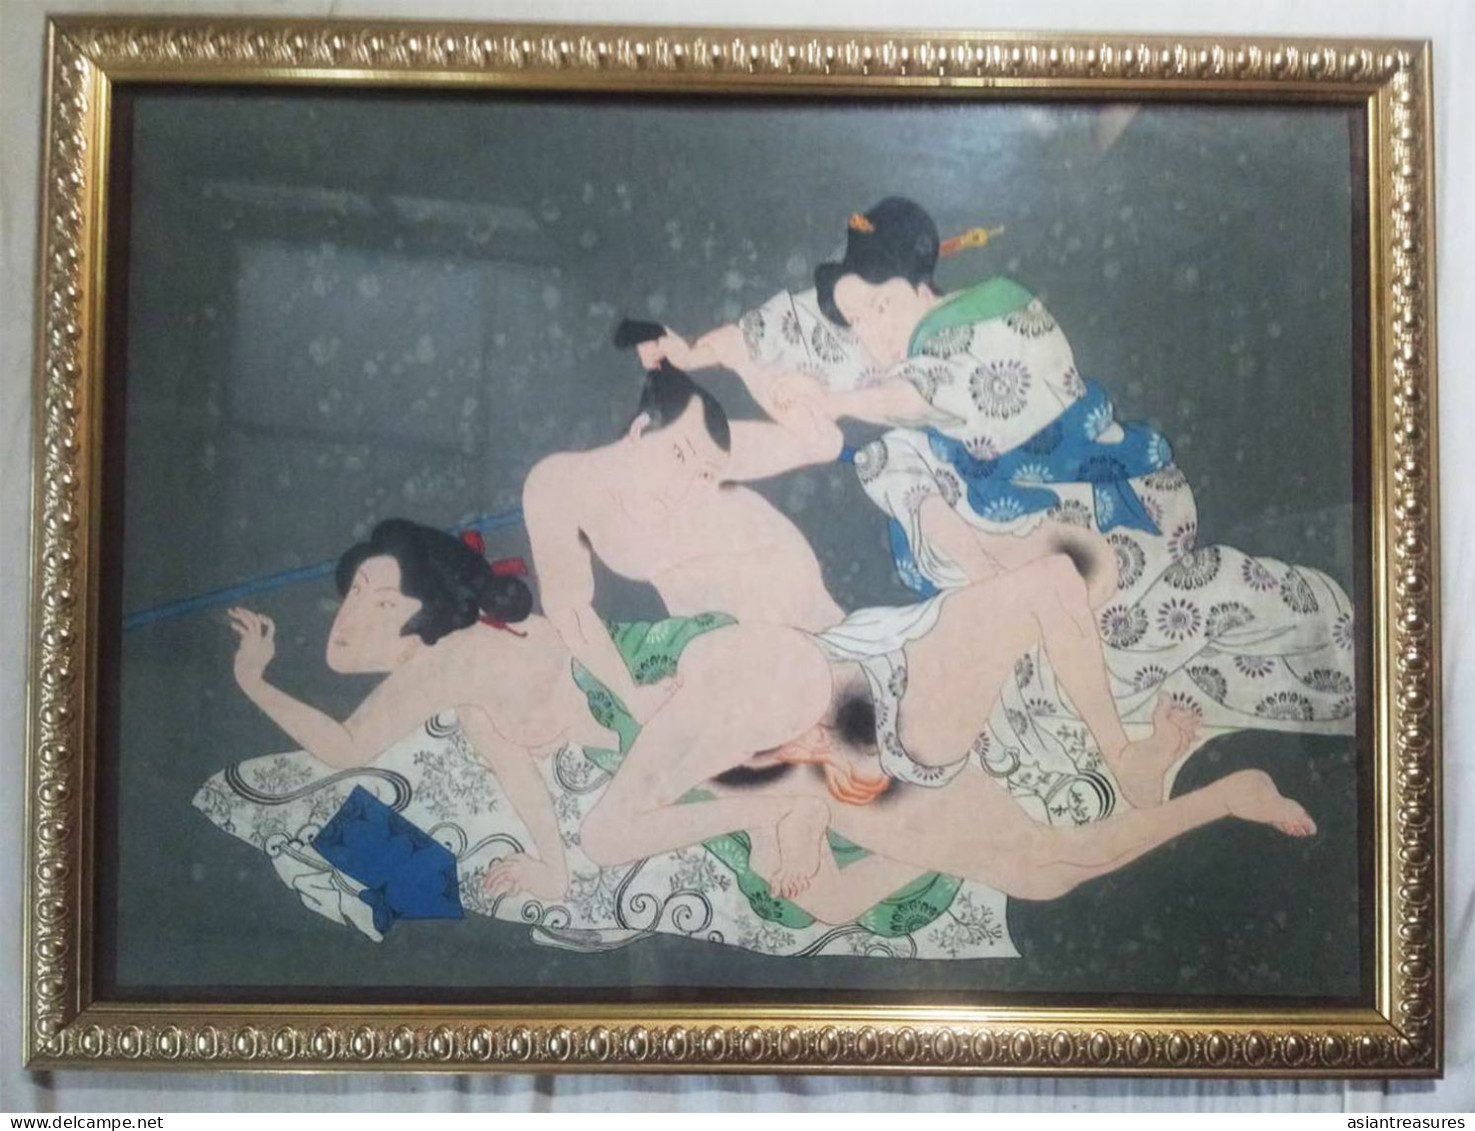 Japanese Shunga Explicit Erotic Art Picture 80 Years+ Old - Asian Art